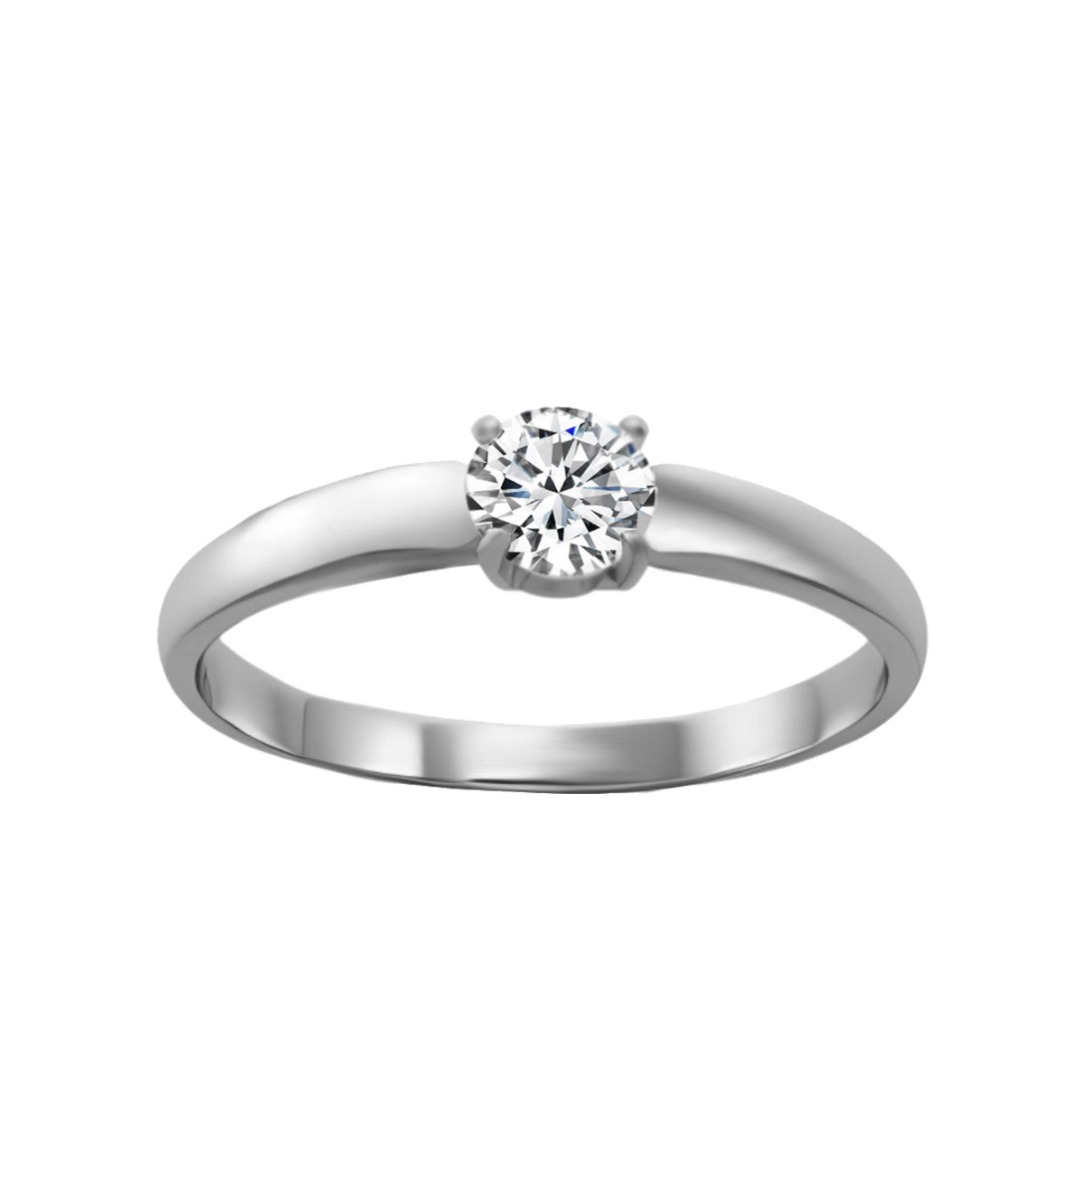 anillo compromiso oro blanco 18 kilates con diamante talla brillante de 0,25 quilates fotografia para joyeria online el rubi joyeros toma frontal